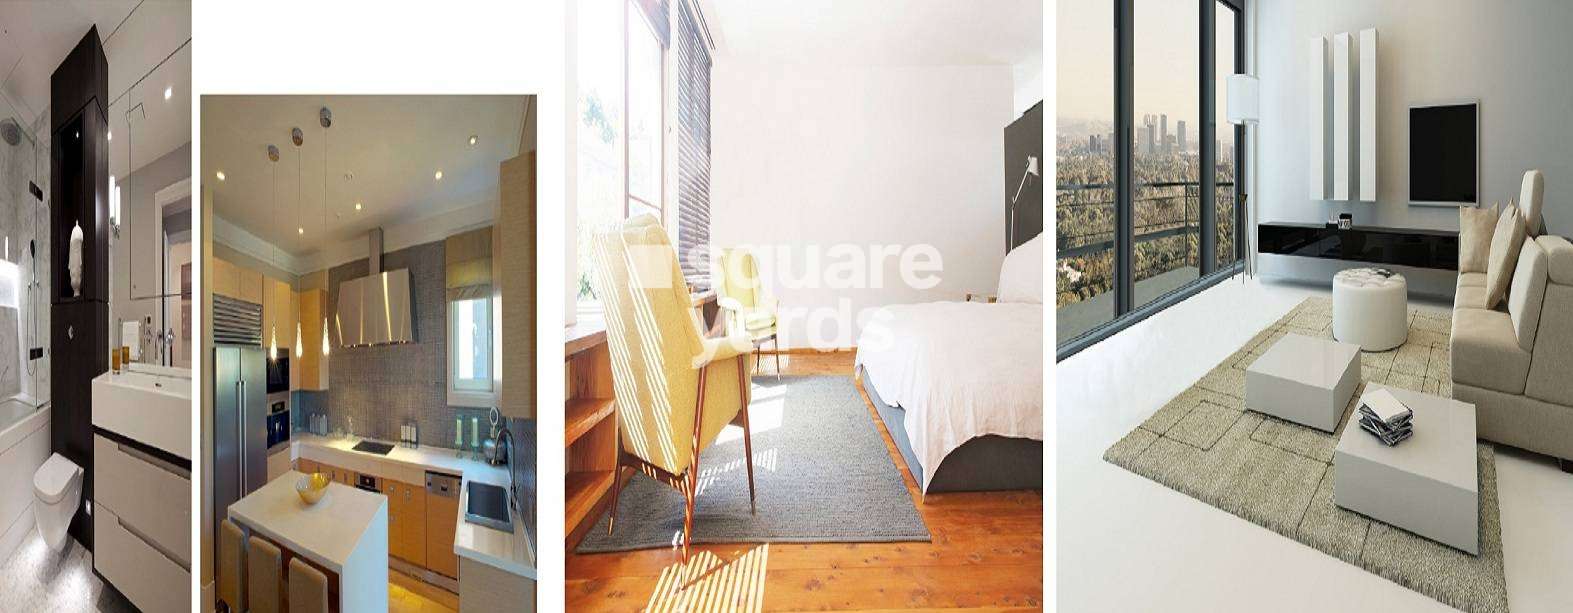 shapoorji pallonji alpine project apartment interiors1